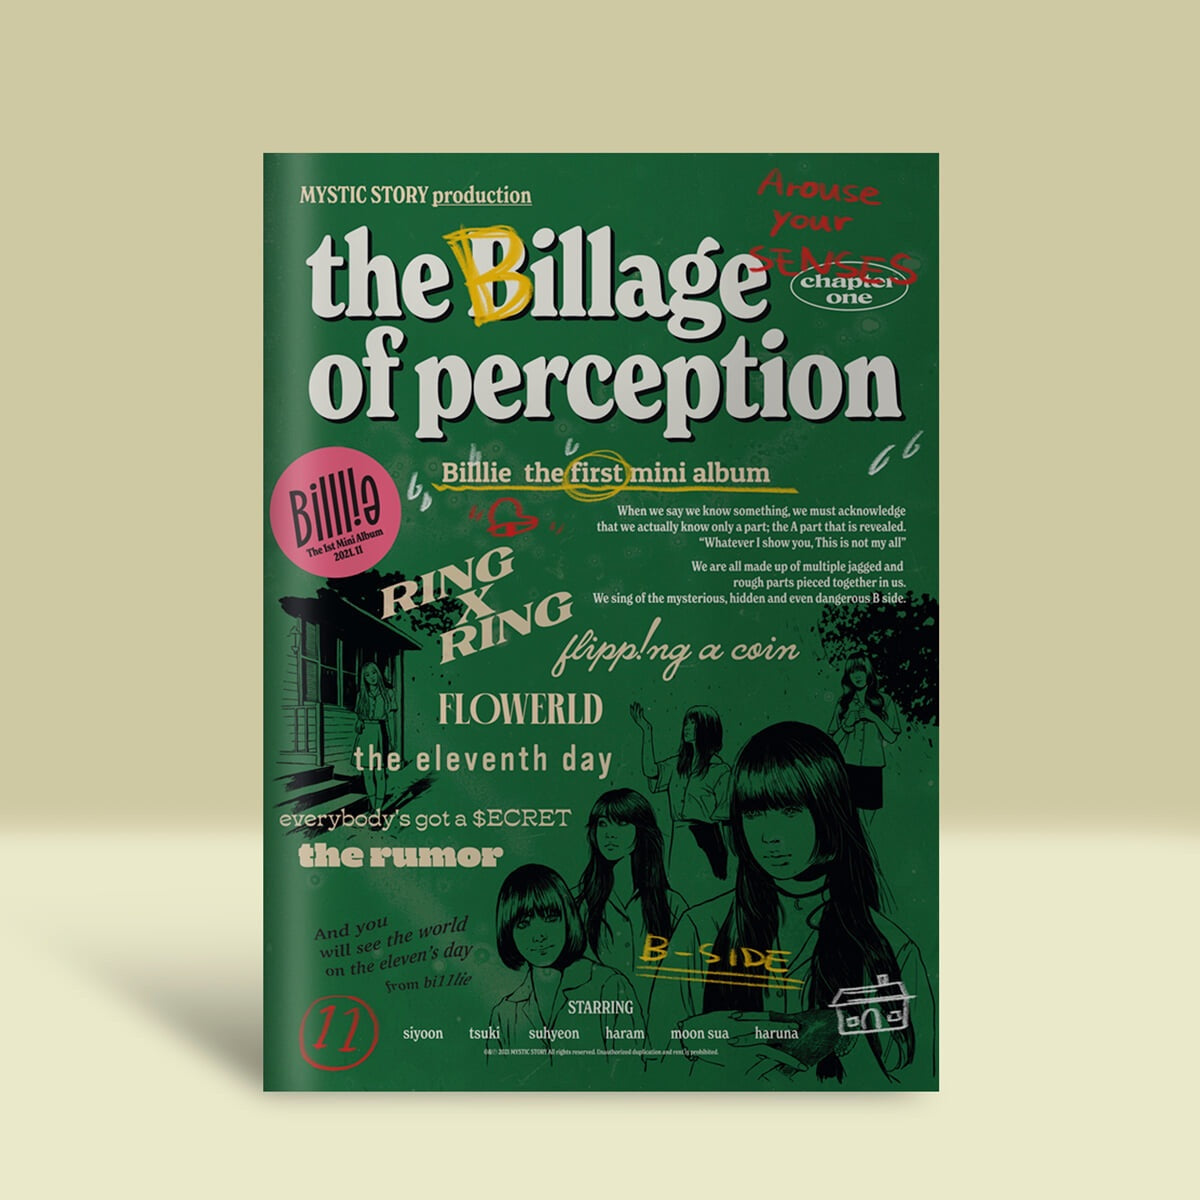 Billlie 1st Mini Album : the Billage of perception: chapter one